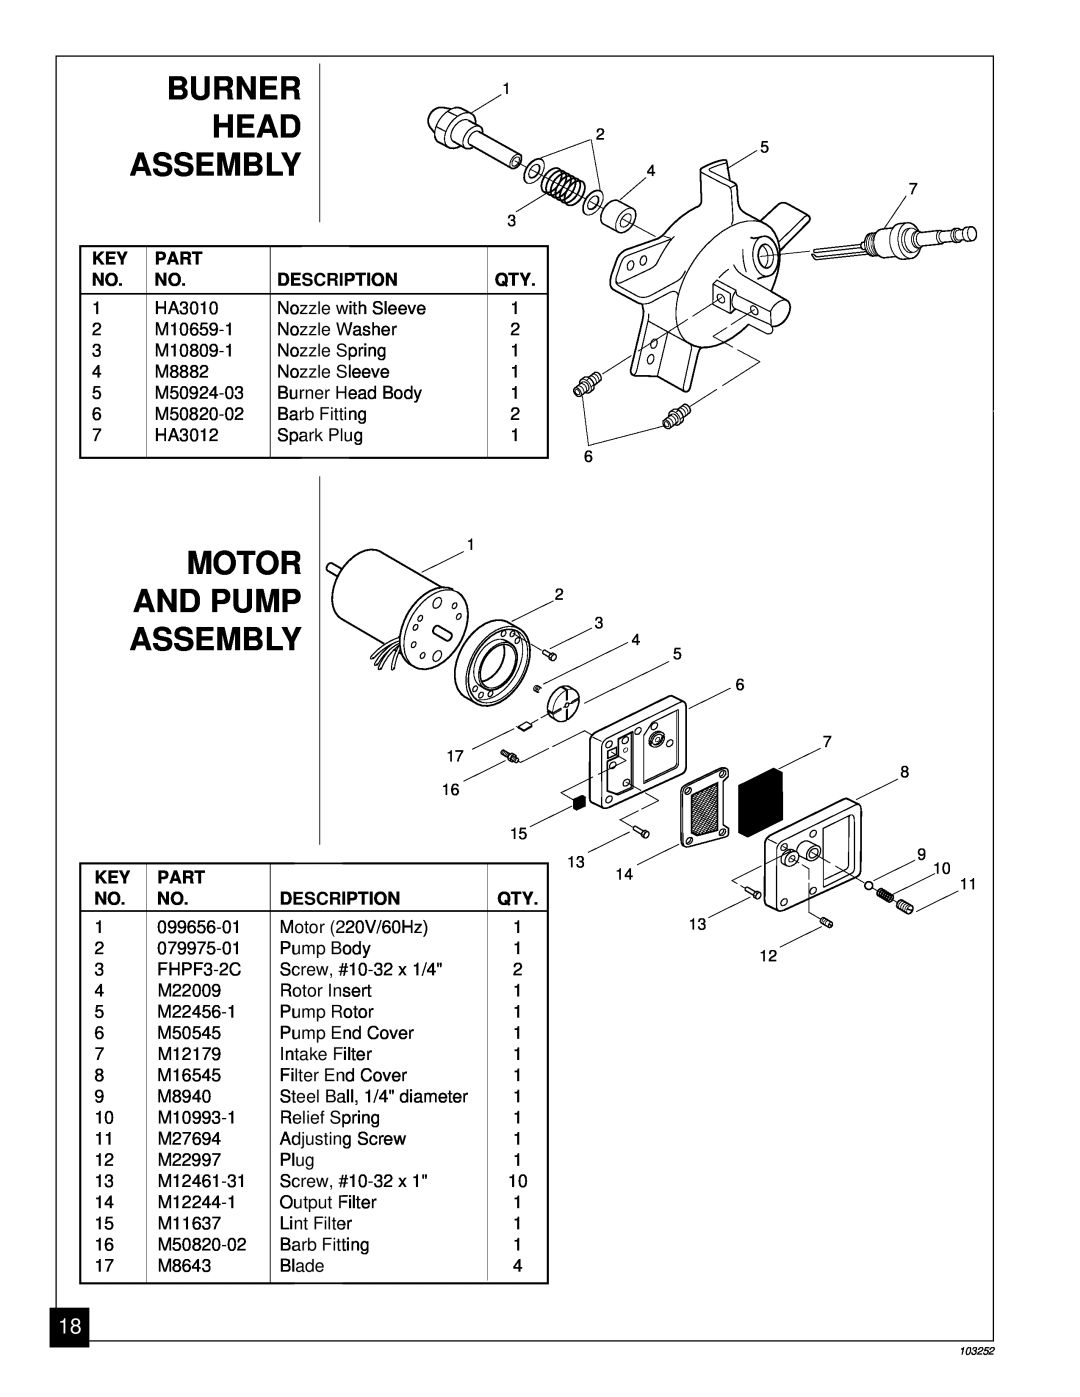 Desa RK150 owner manual Burner Head Assembly, Motor And Pump Assembly, Part, Description 